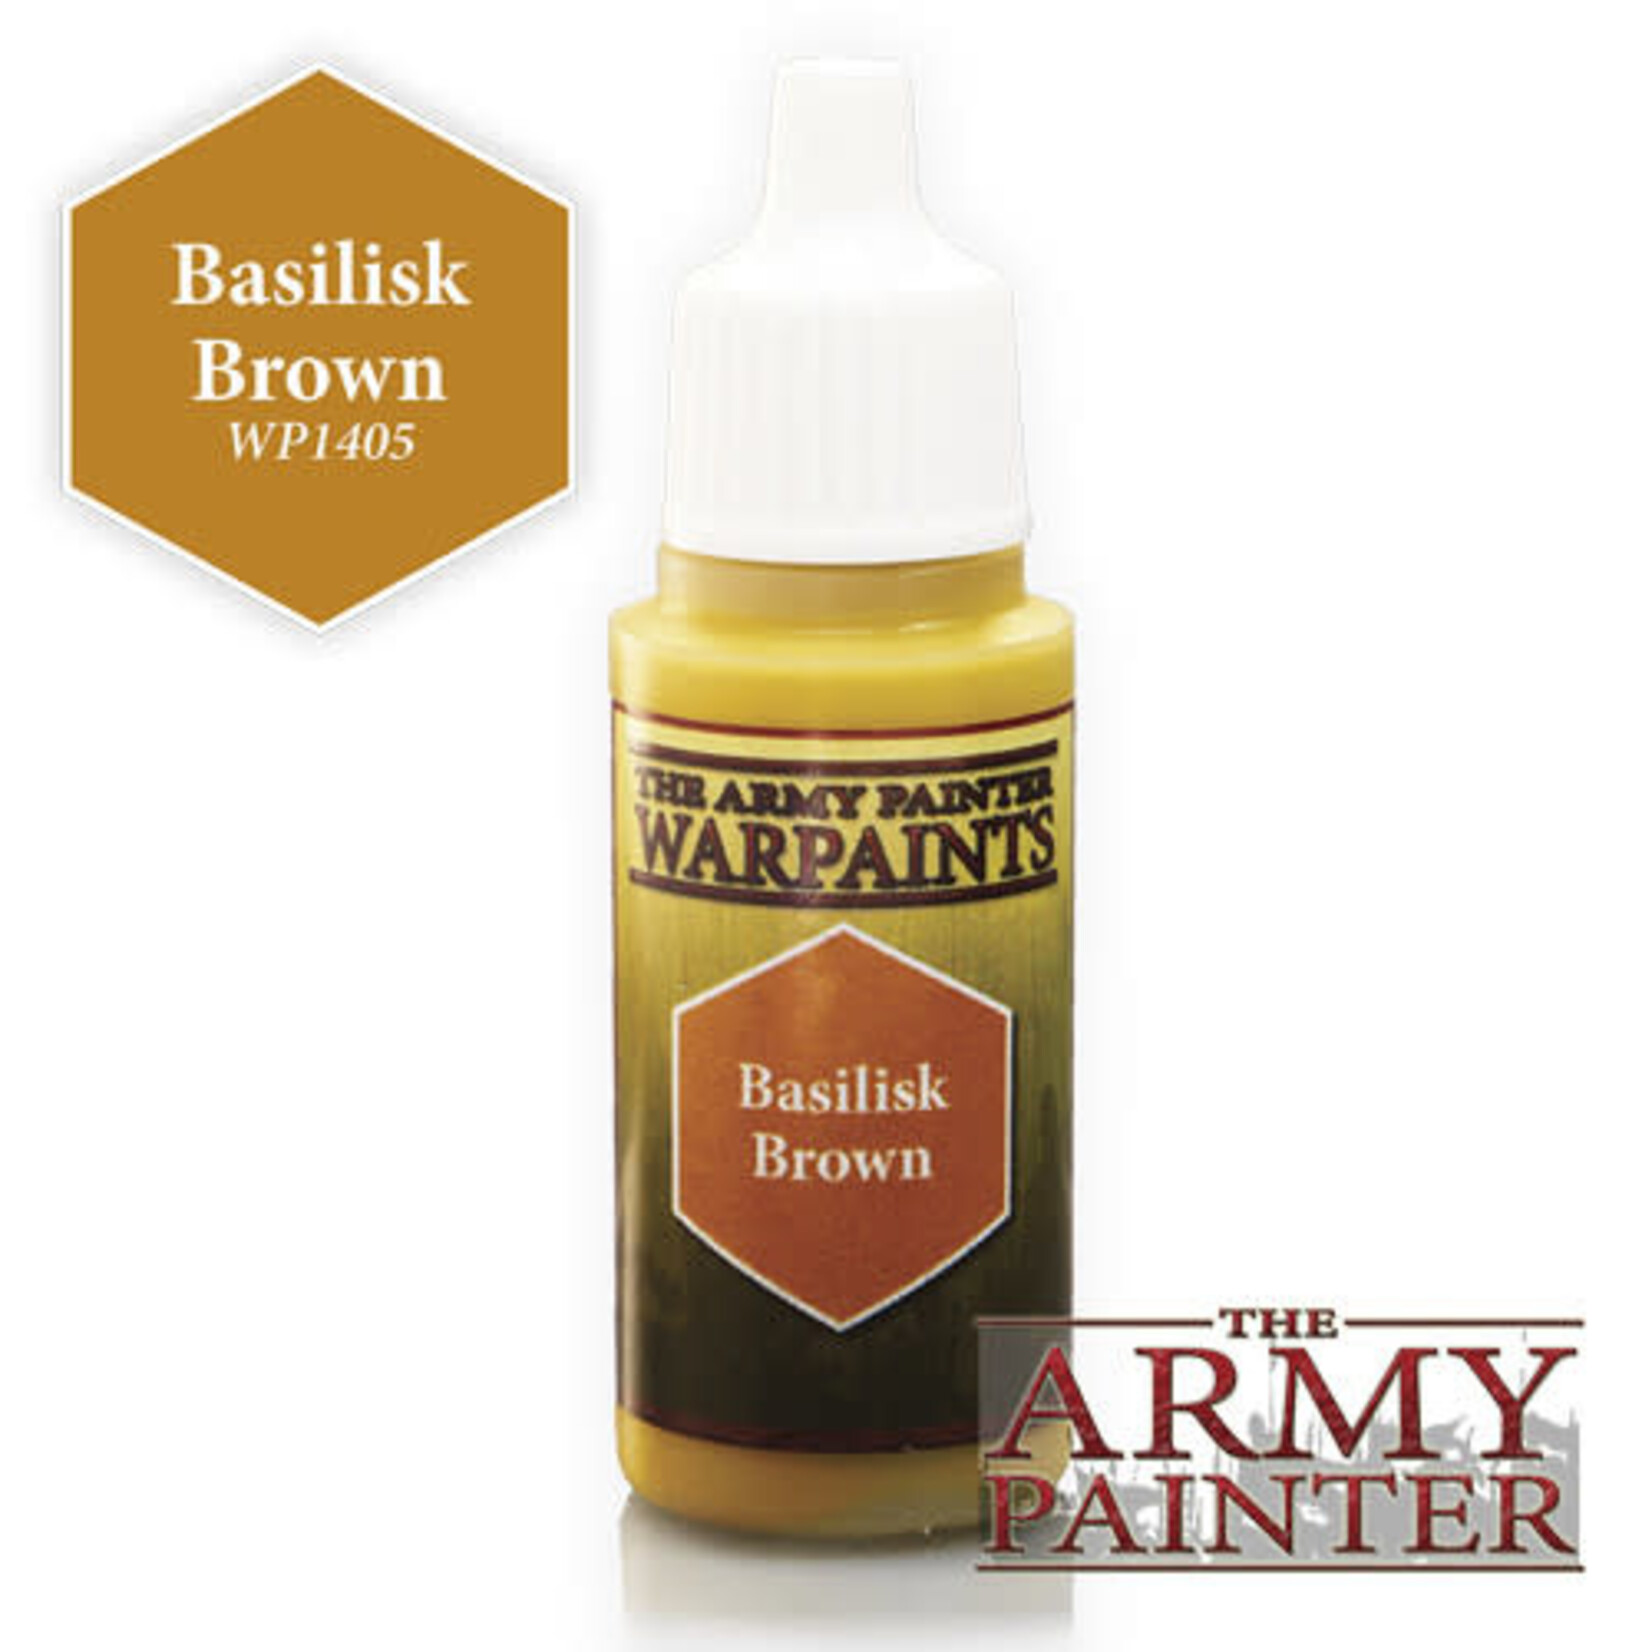 The Army Painter Warpaints: Basilisk Brown 18ml